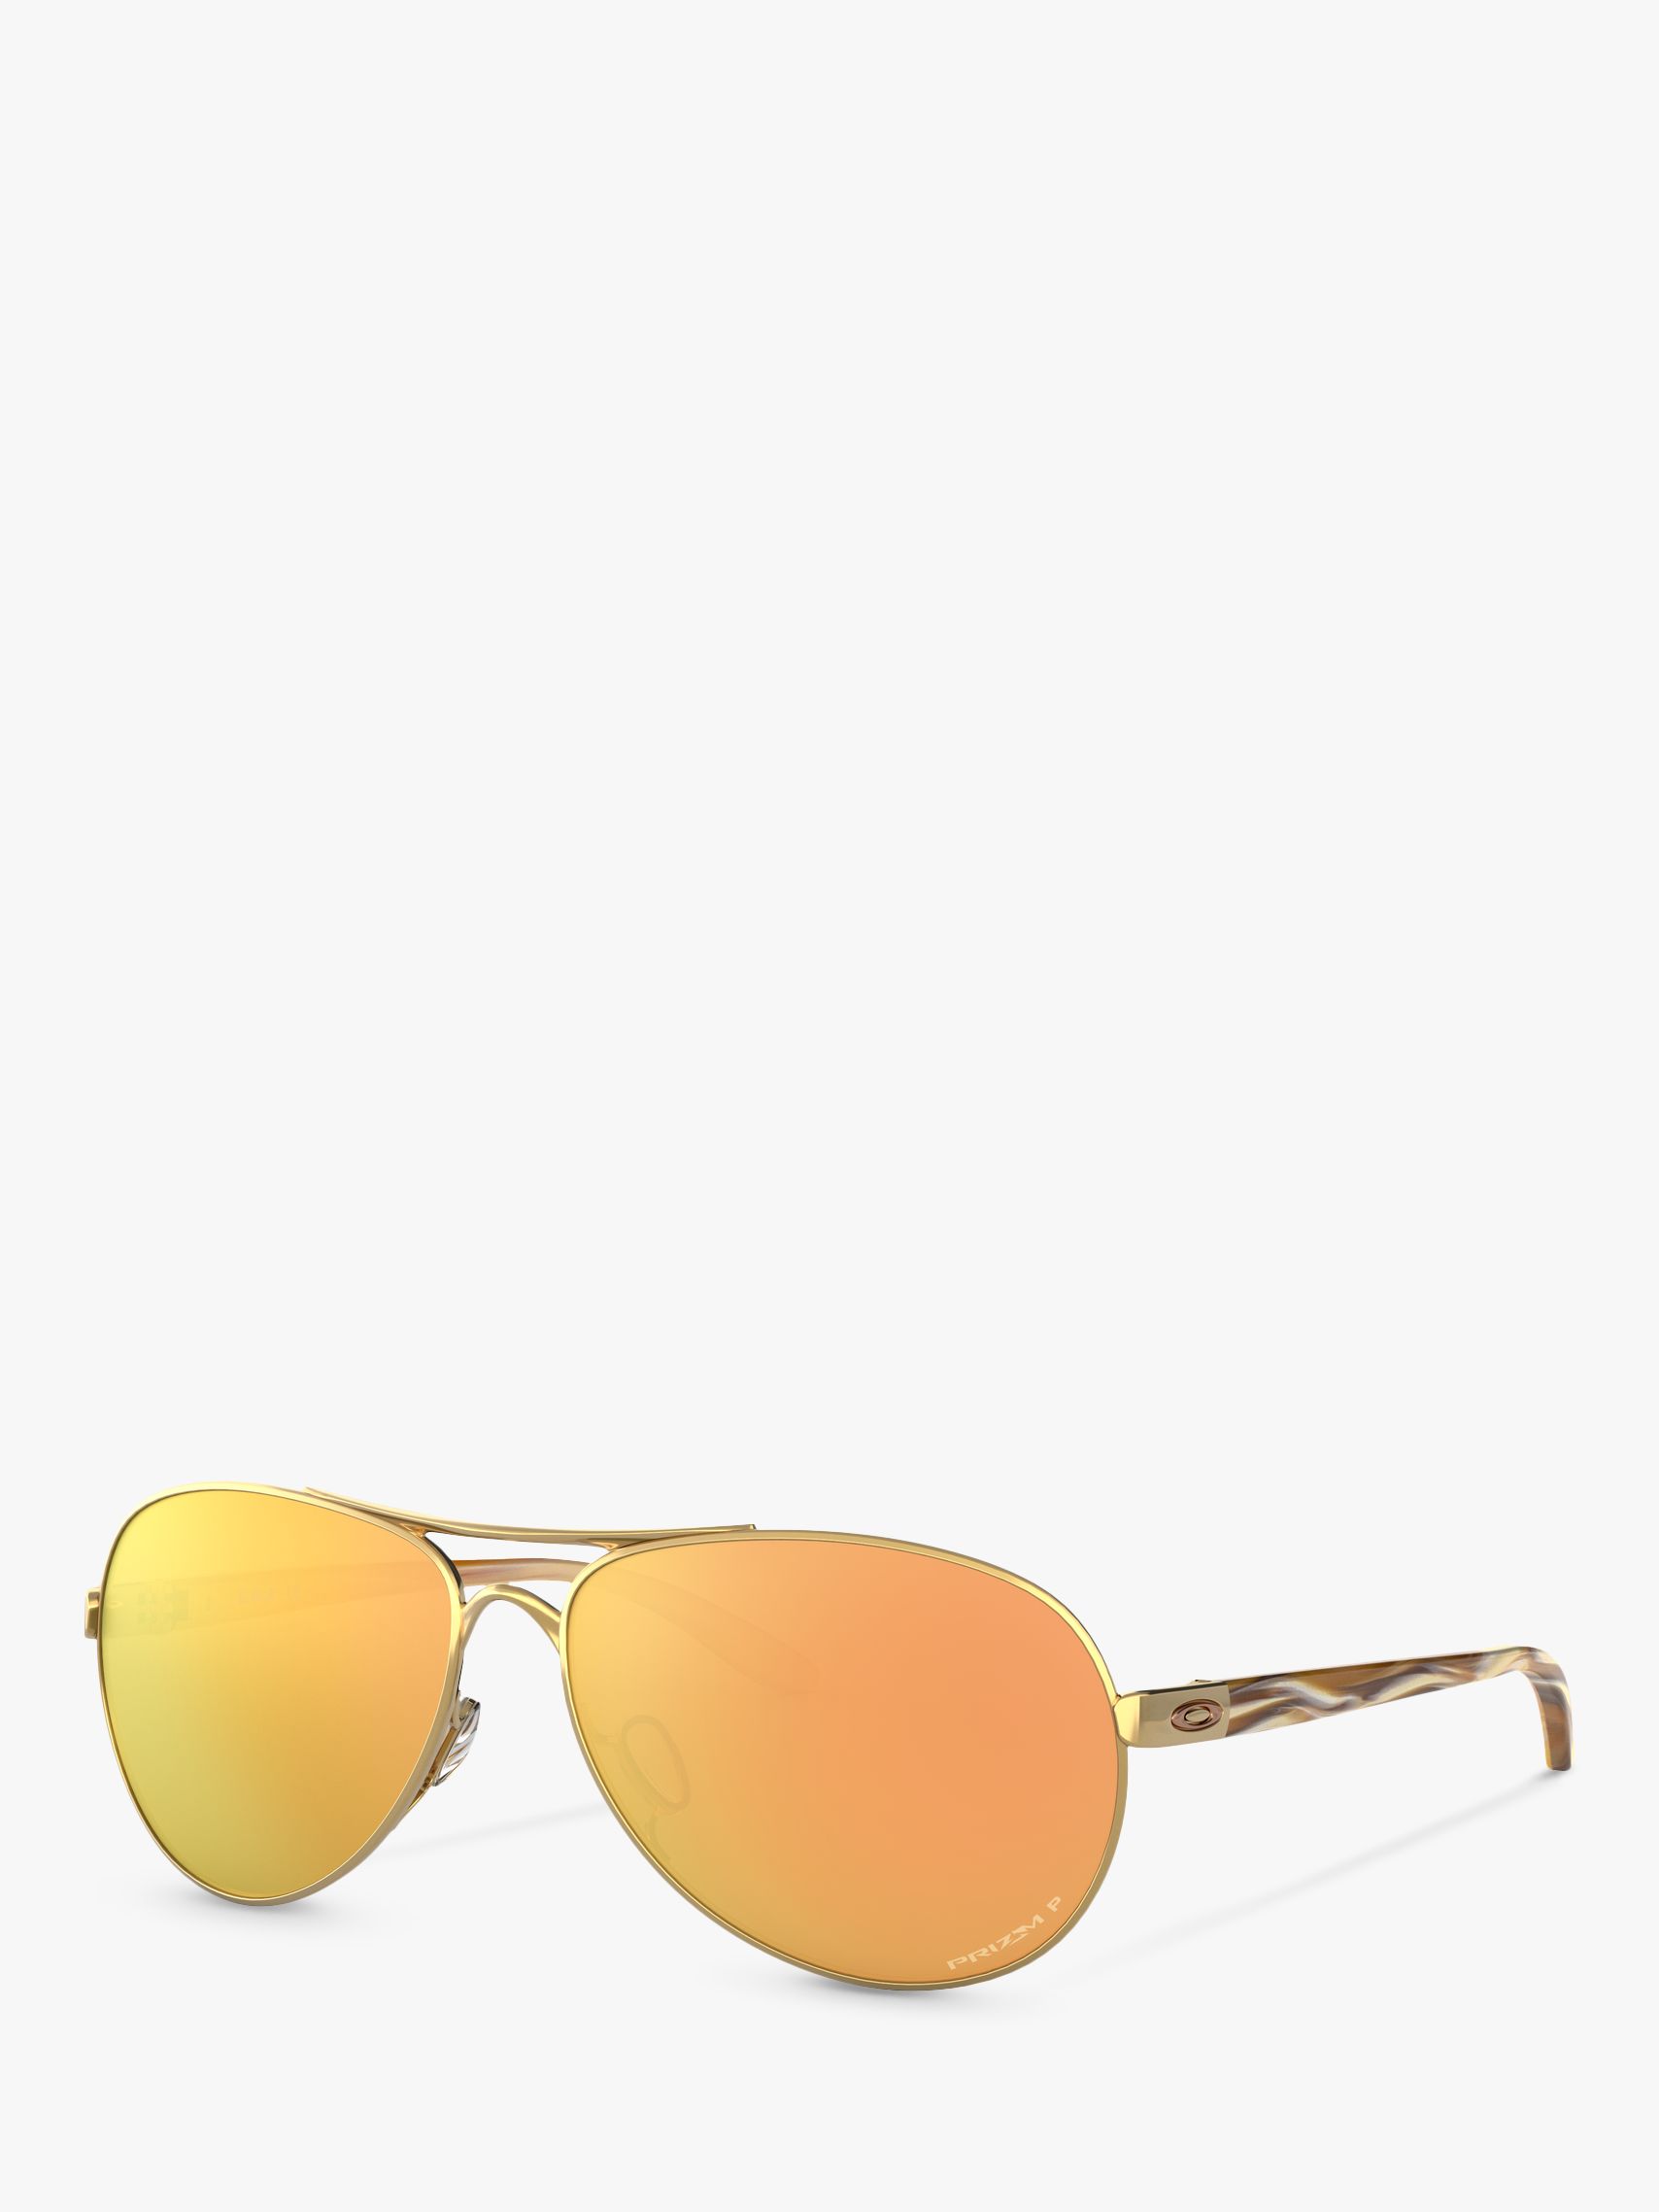 womens oakley aviator sunglasses